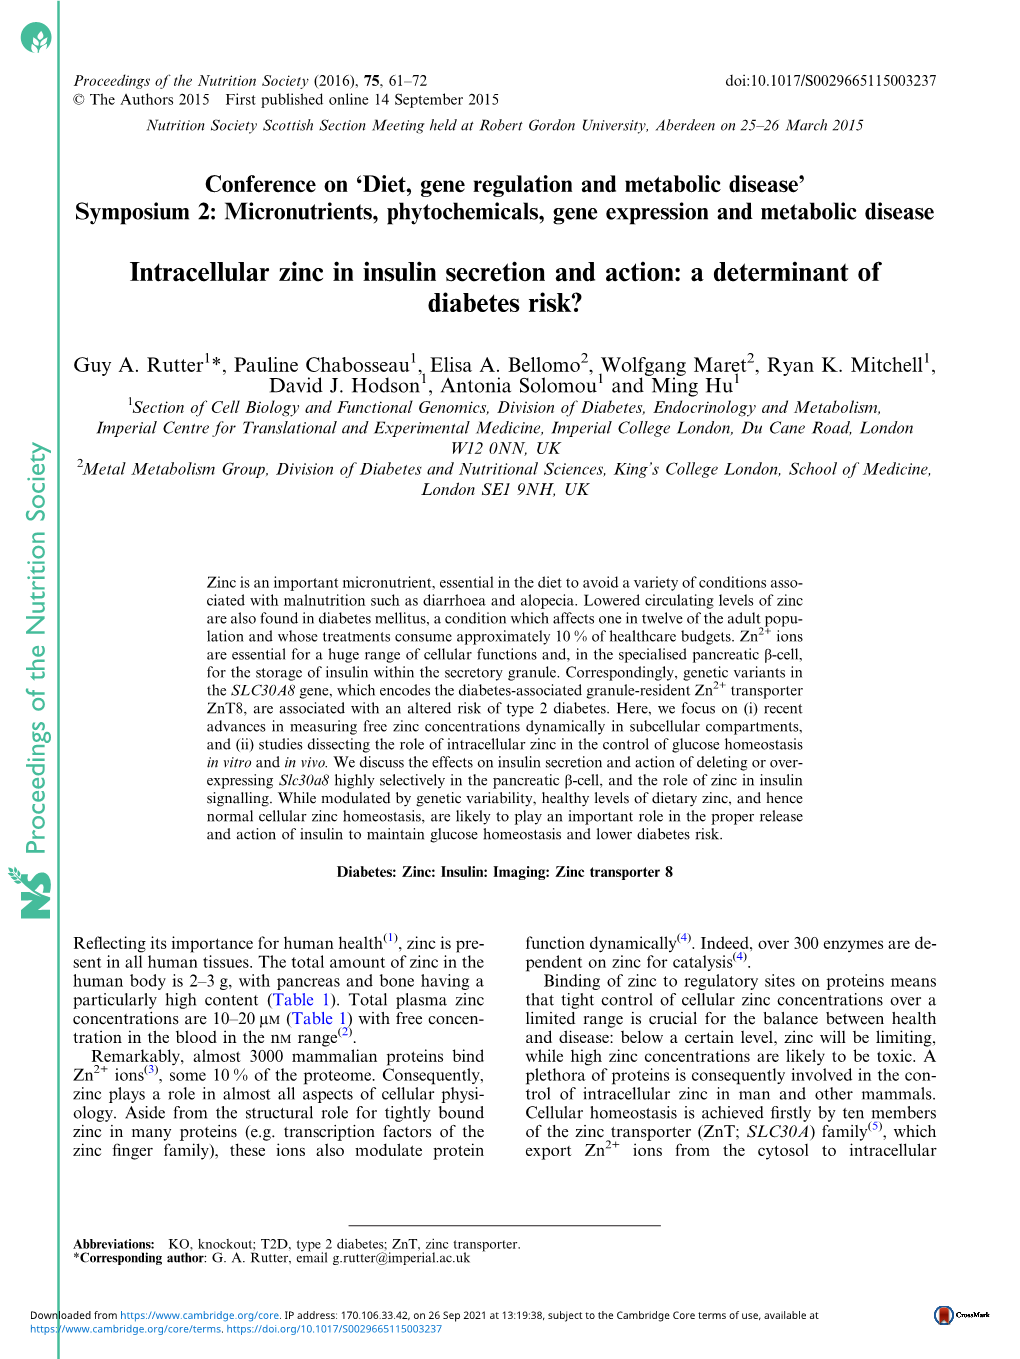 Proceedings of the Nutrition Society Intracellular Zinc in Insulin Secretion